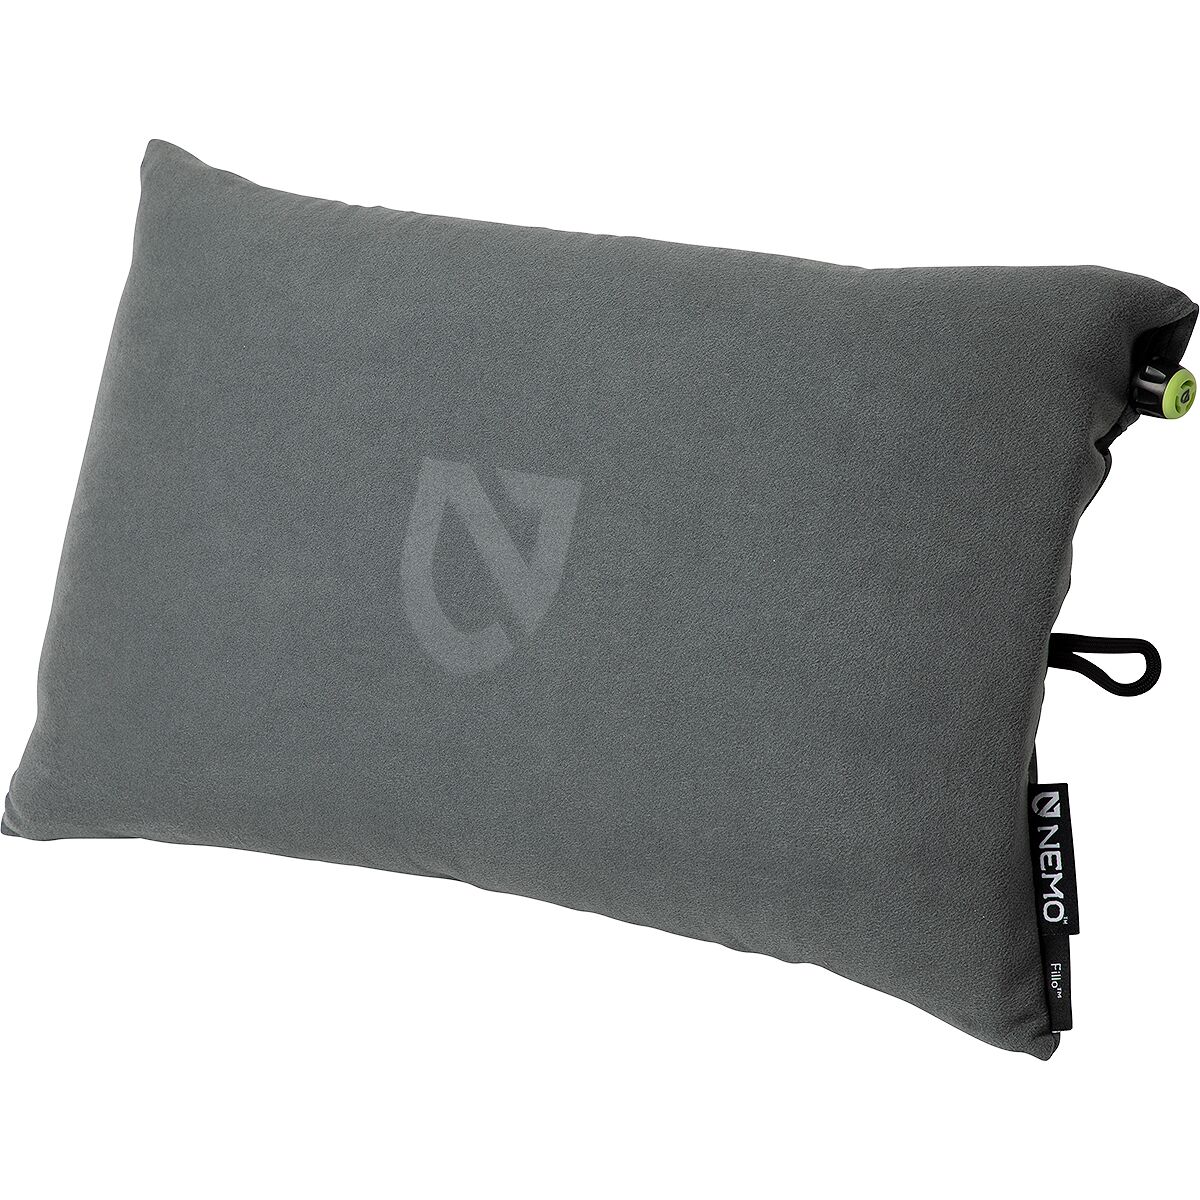 NEMO Equipment Inc. Fillo Pillow